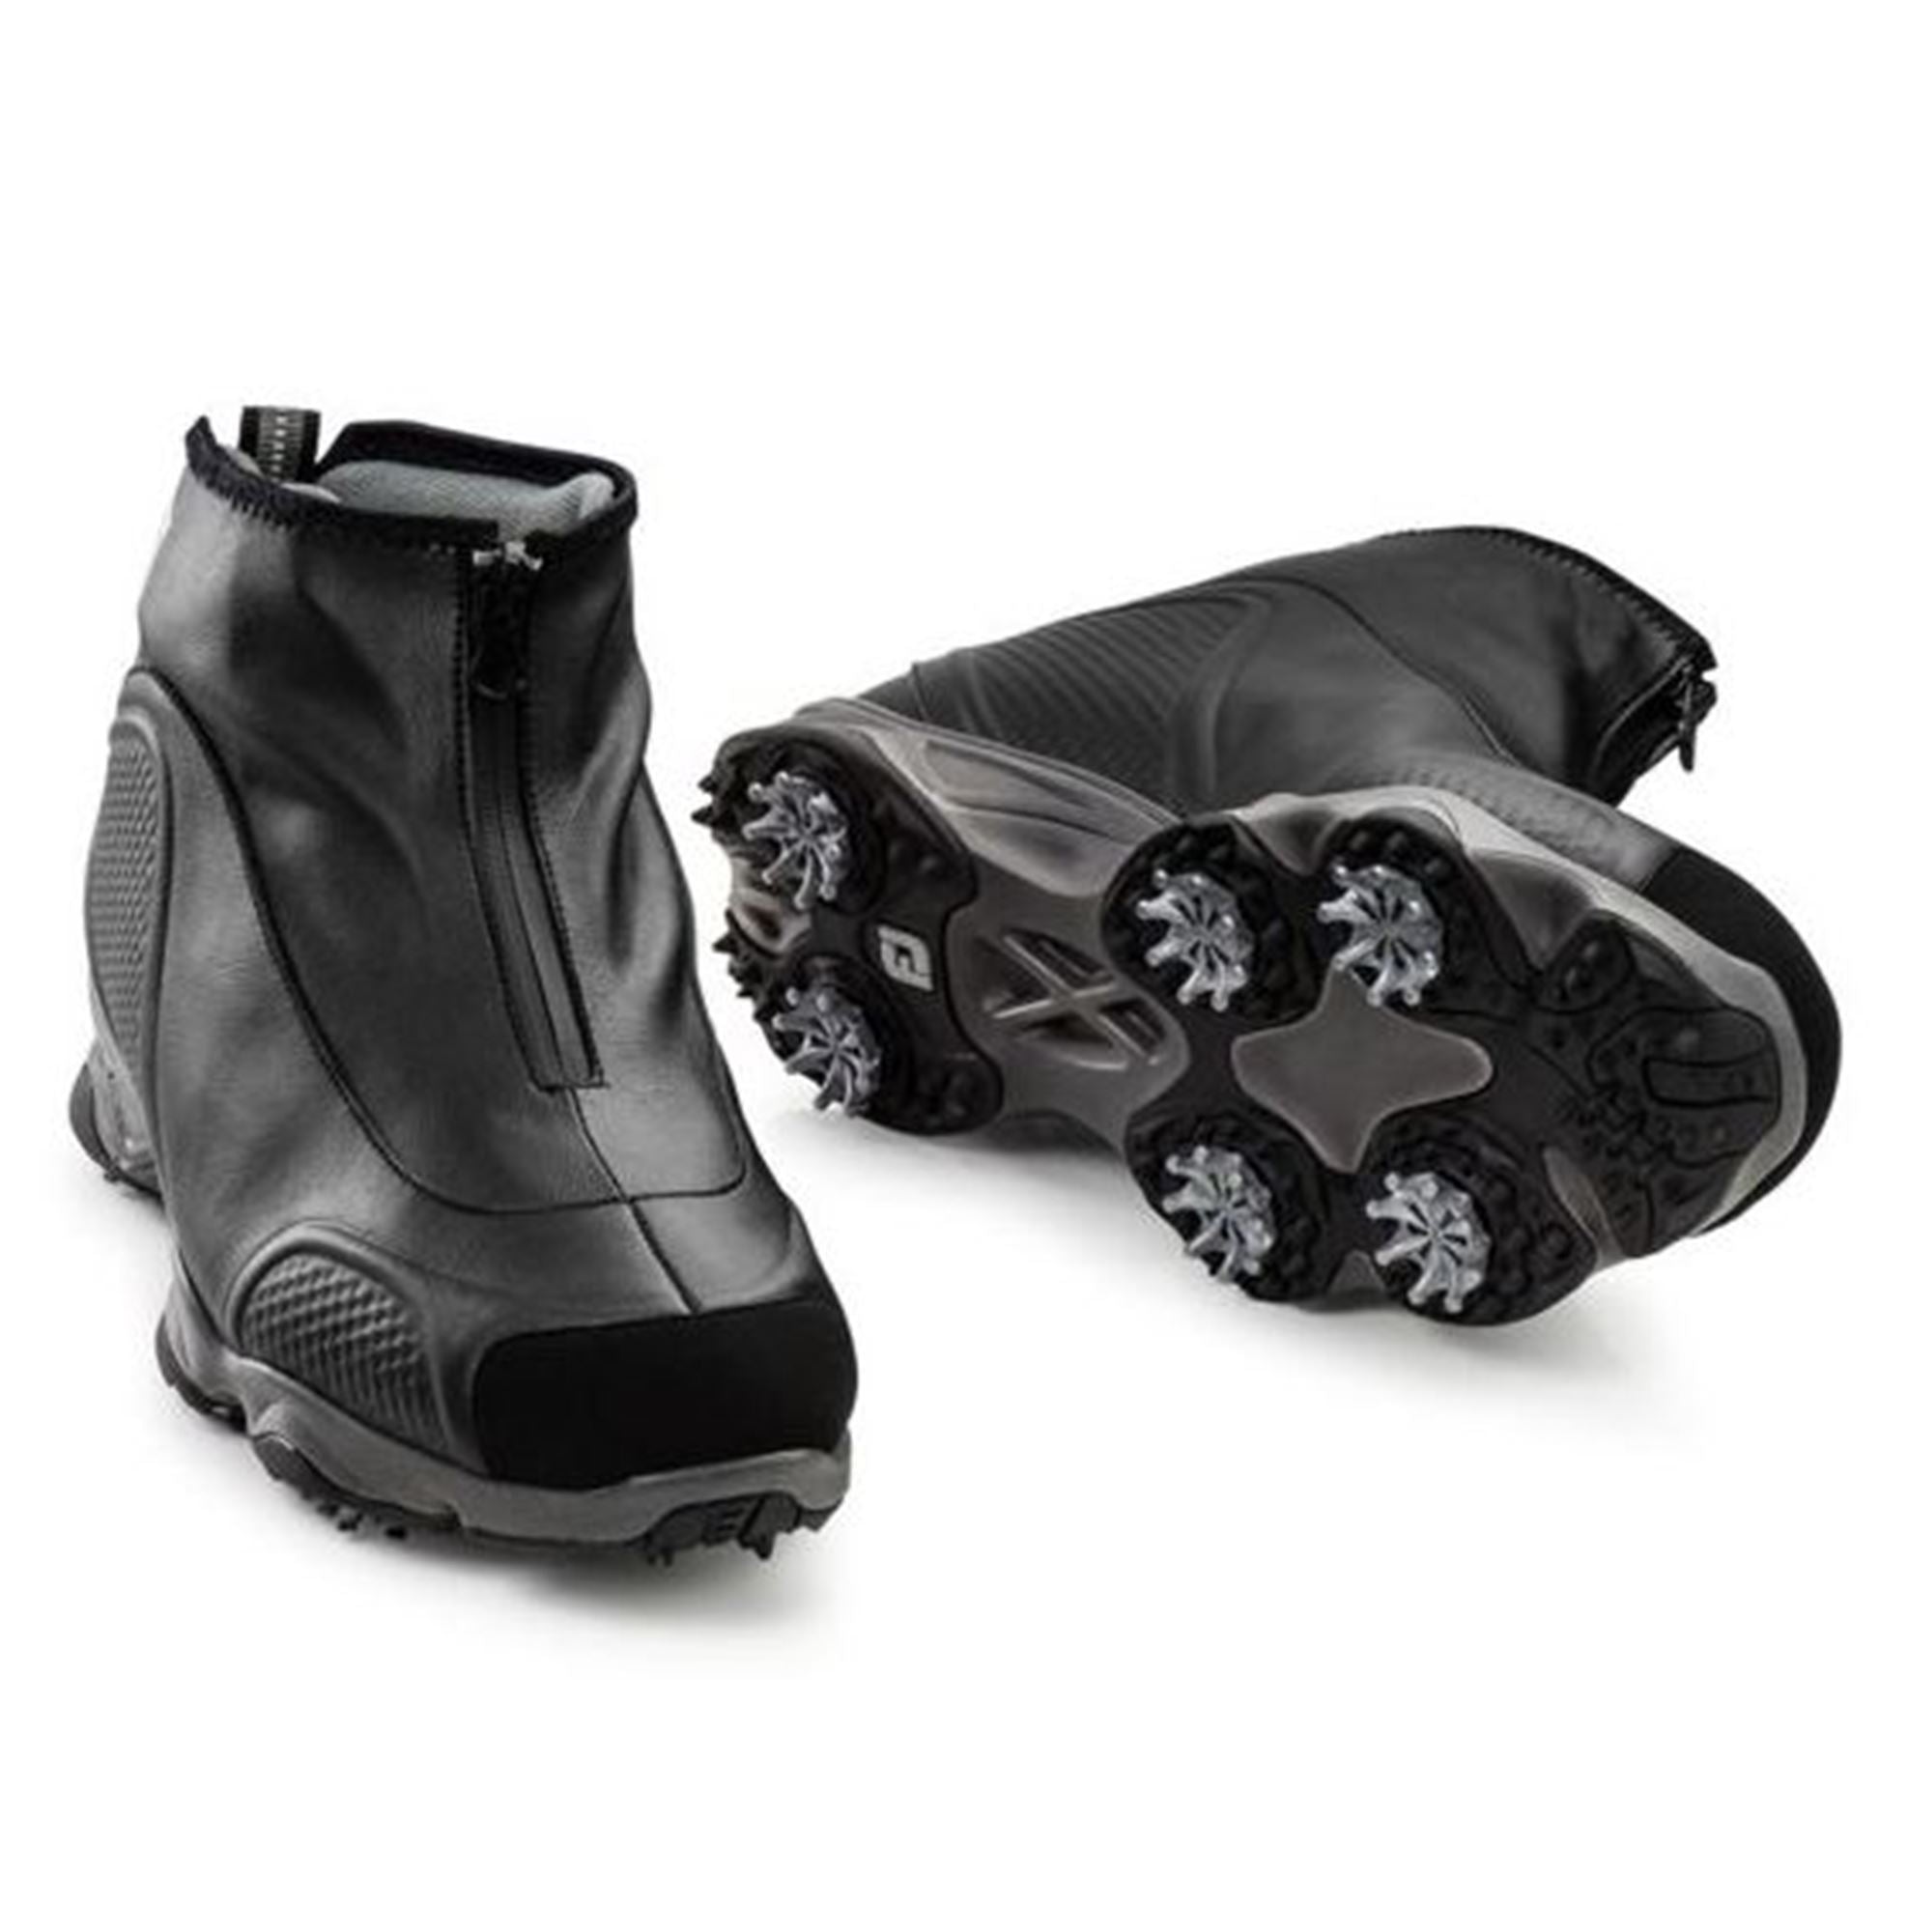 footjoy hydrolite boots